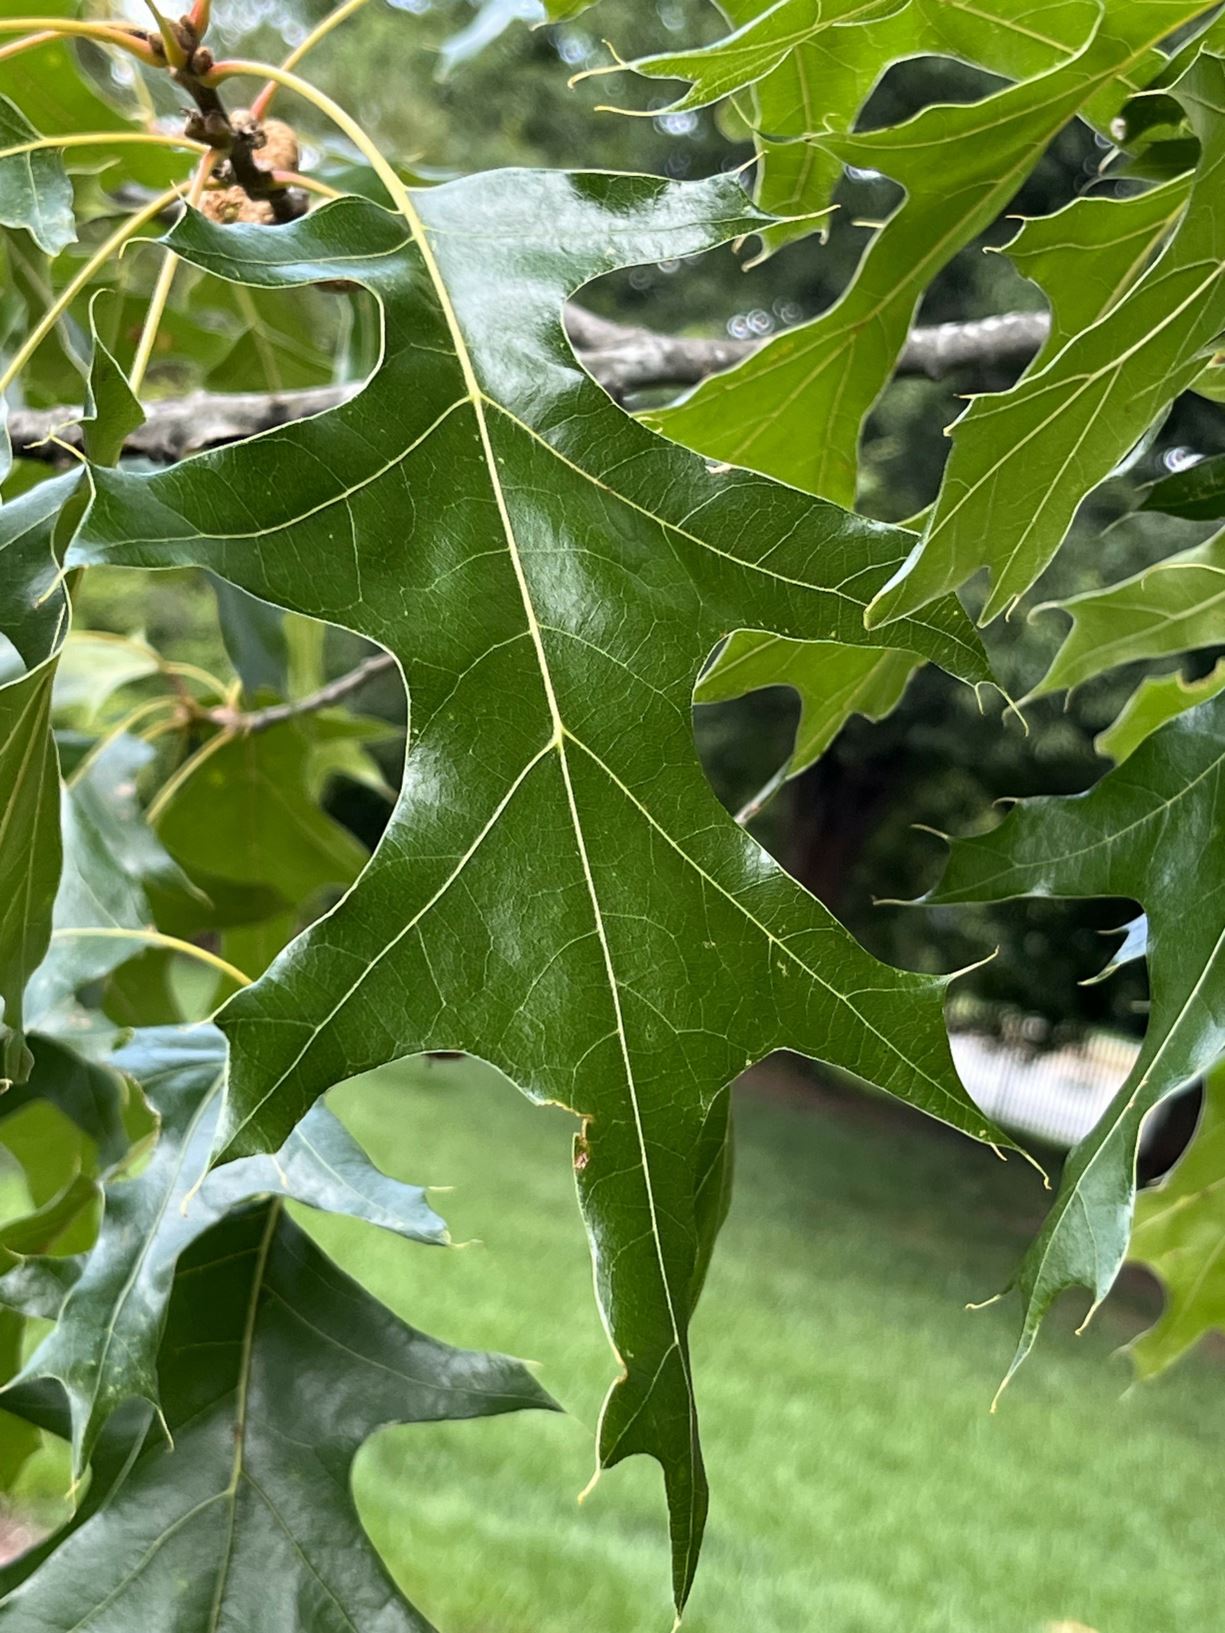 Quercus coccinea - scarlet oak